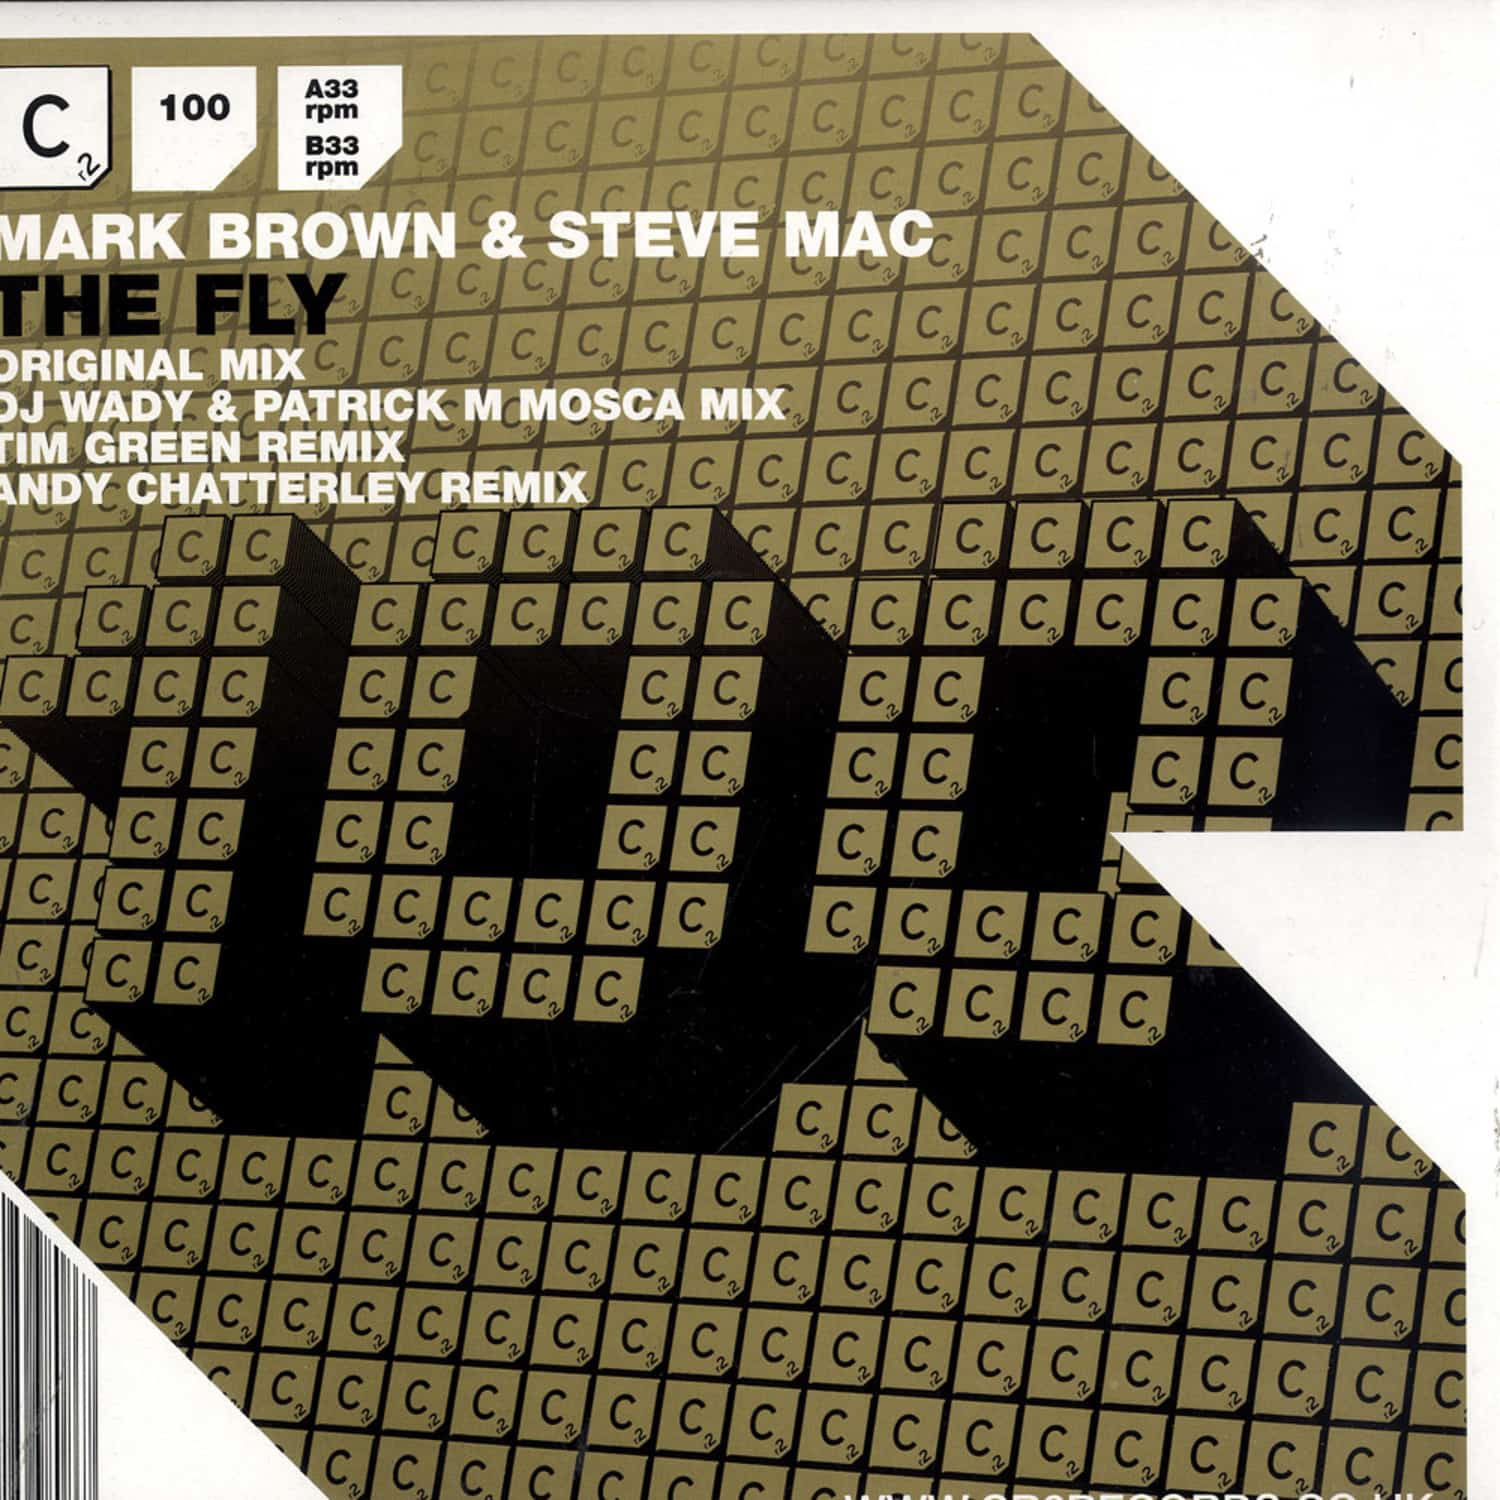 Mark Brown & Steve Mac - THE FLY